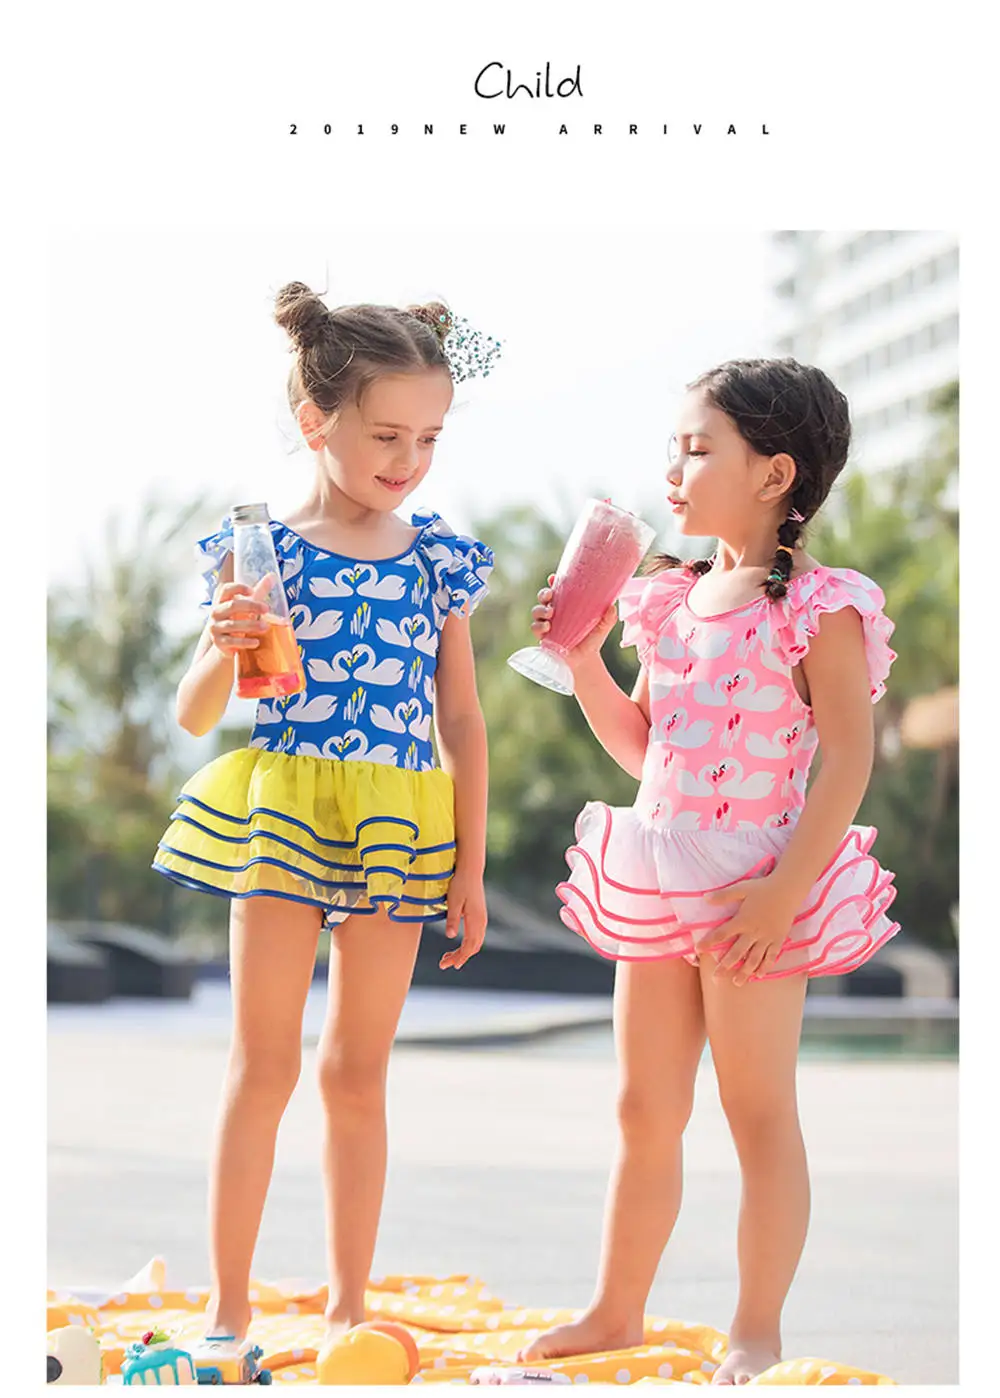 Lace One Piece Swimsuit For Girls Animal Print Children Swimwear Child Ruffle Swim Suit Kids Skirt Bathing Suit 2-14 Year Beach